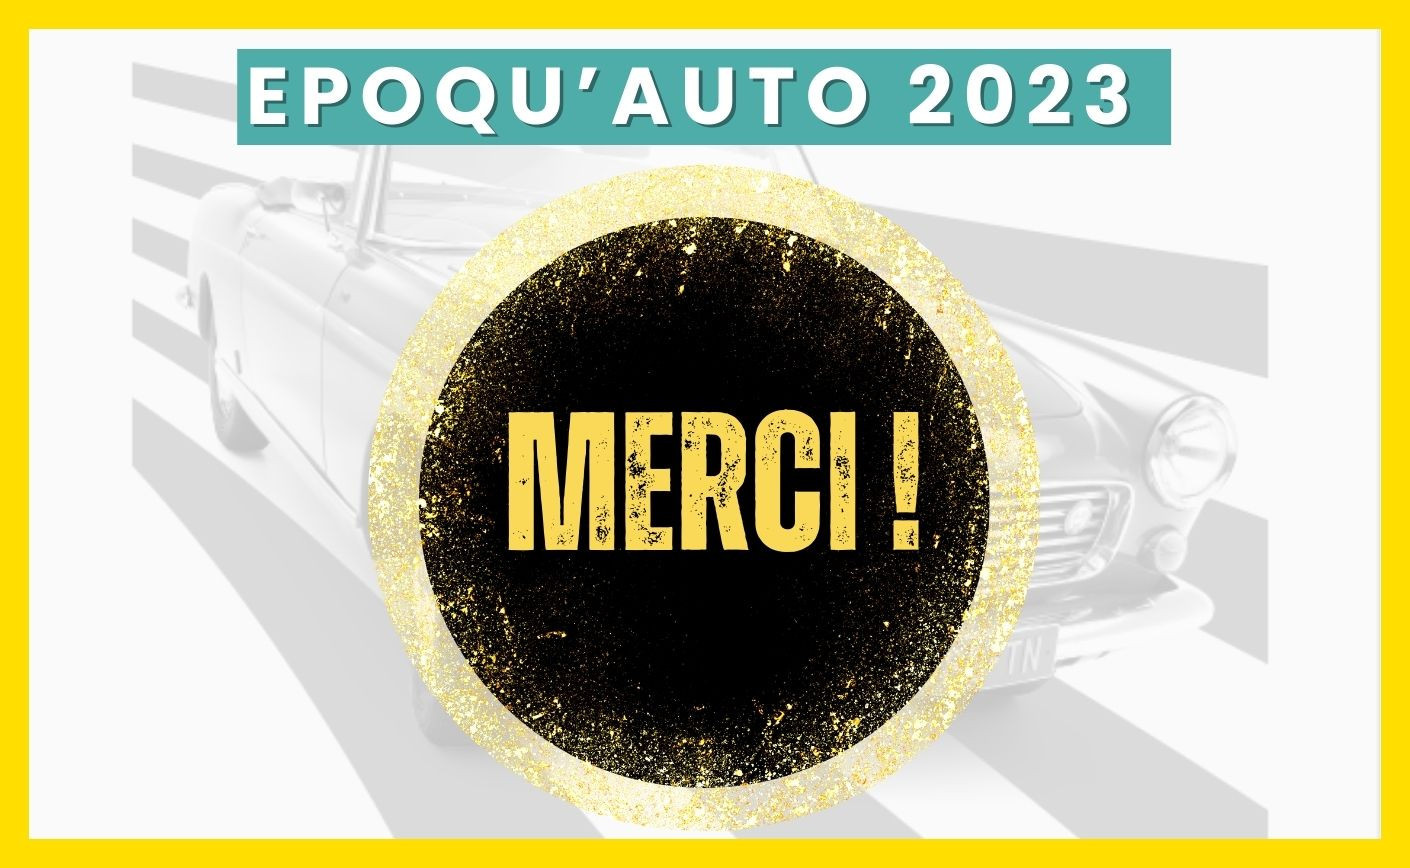 Merci Epoqu'auto 2023 on se donne rdv en 2024 !